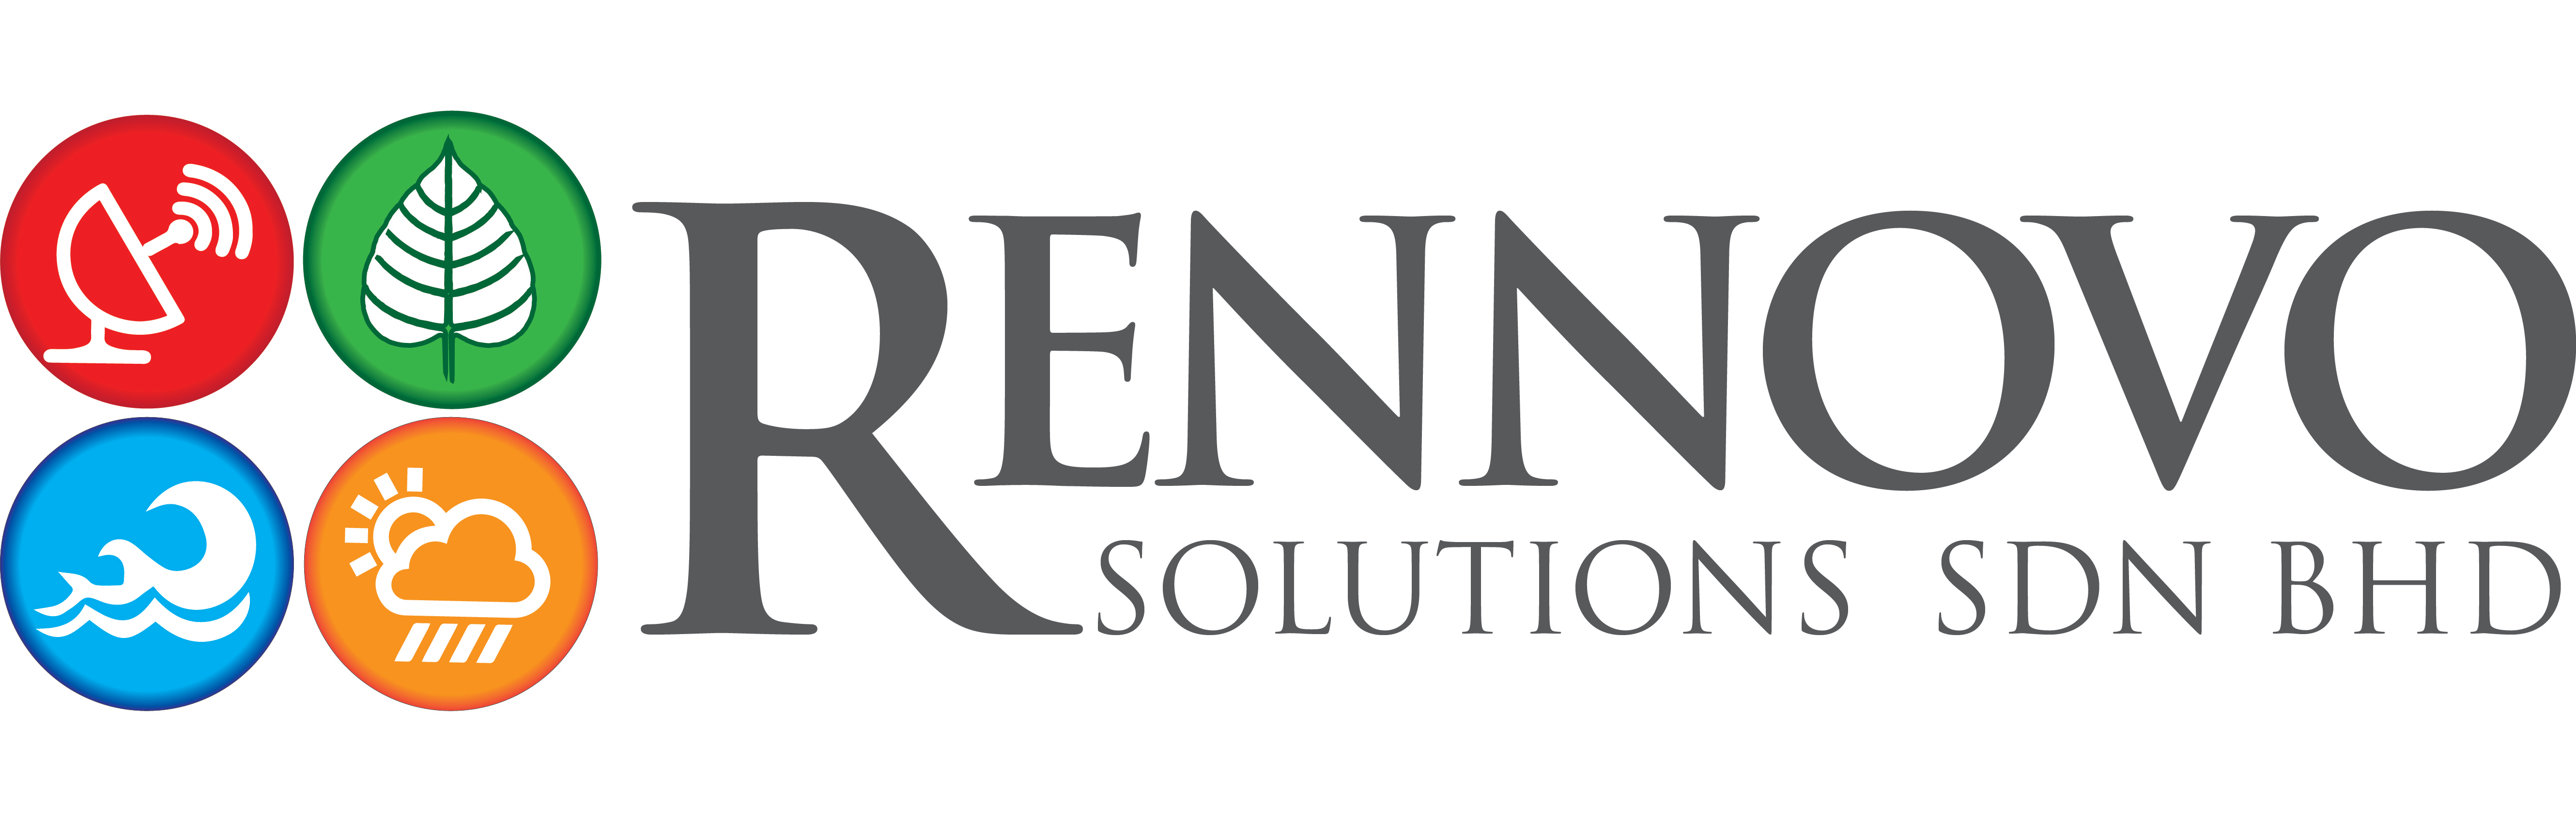 Rennovo Solutions